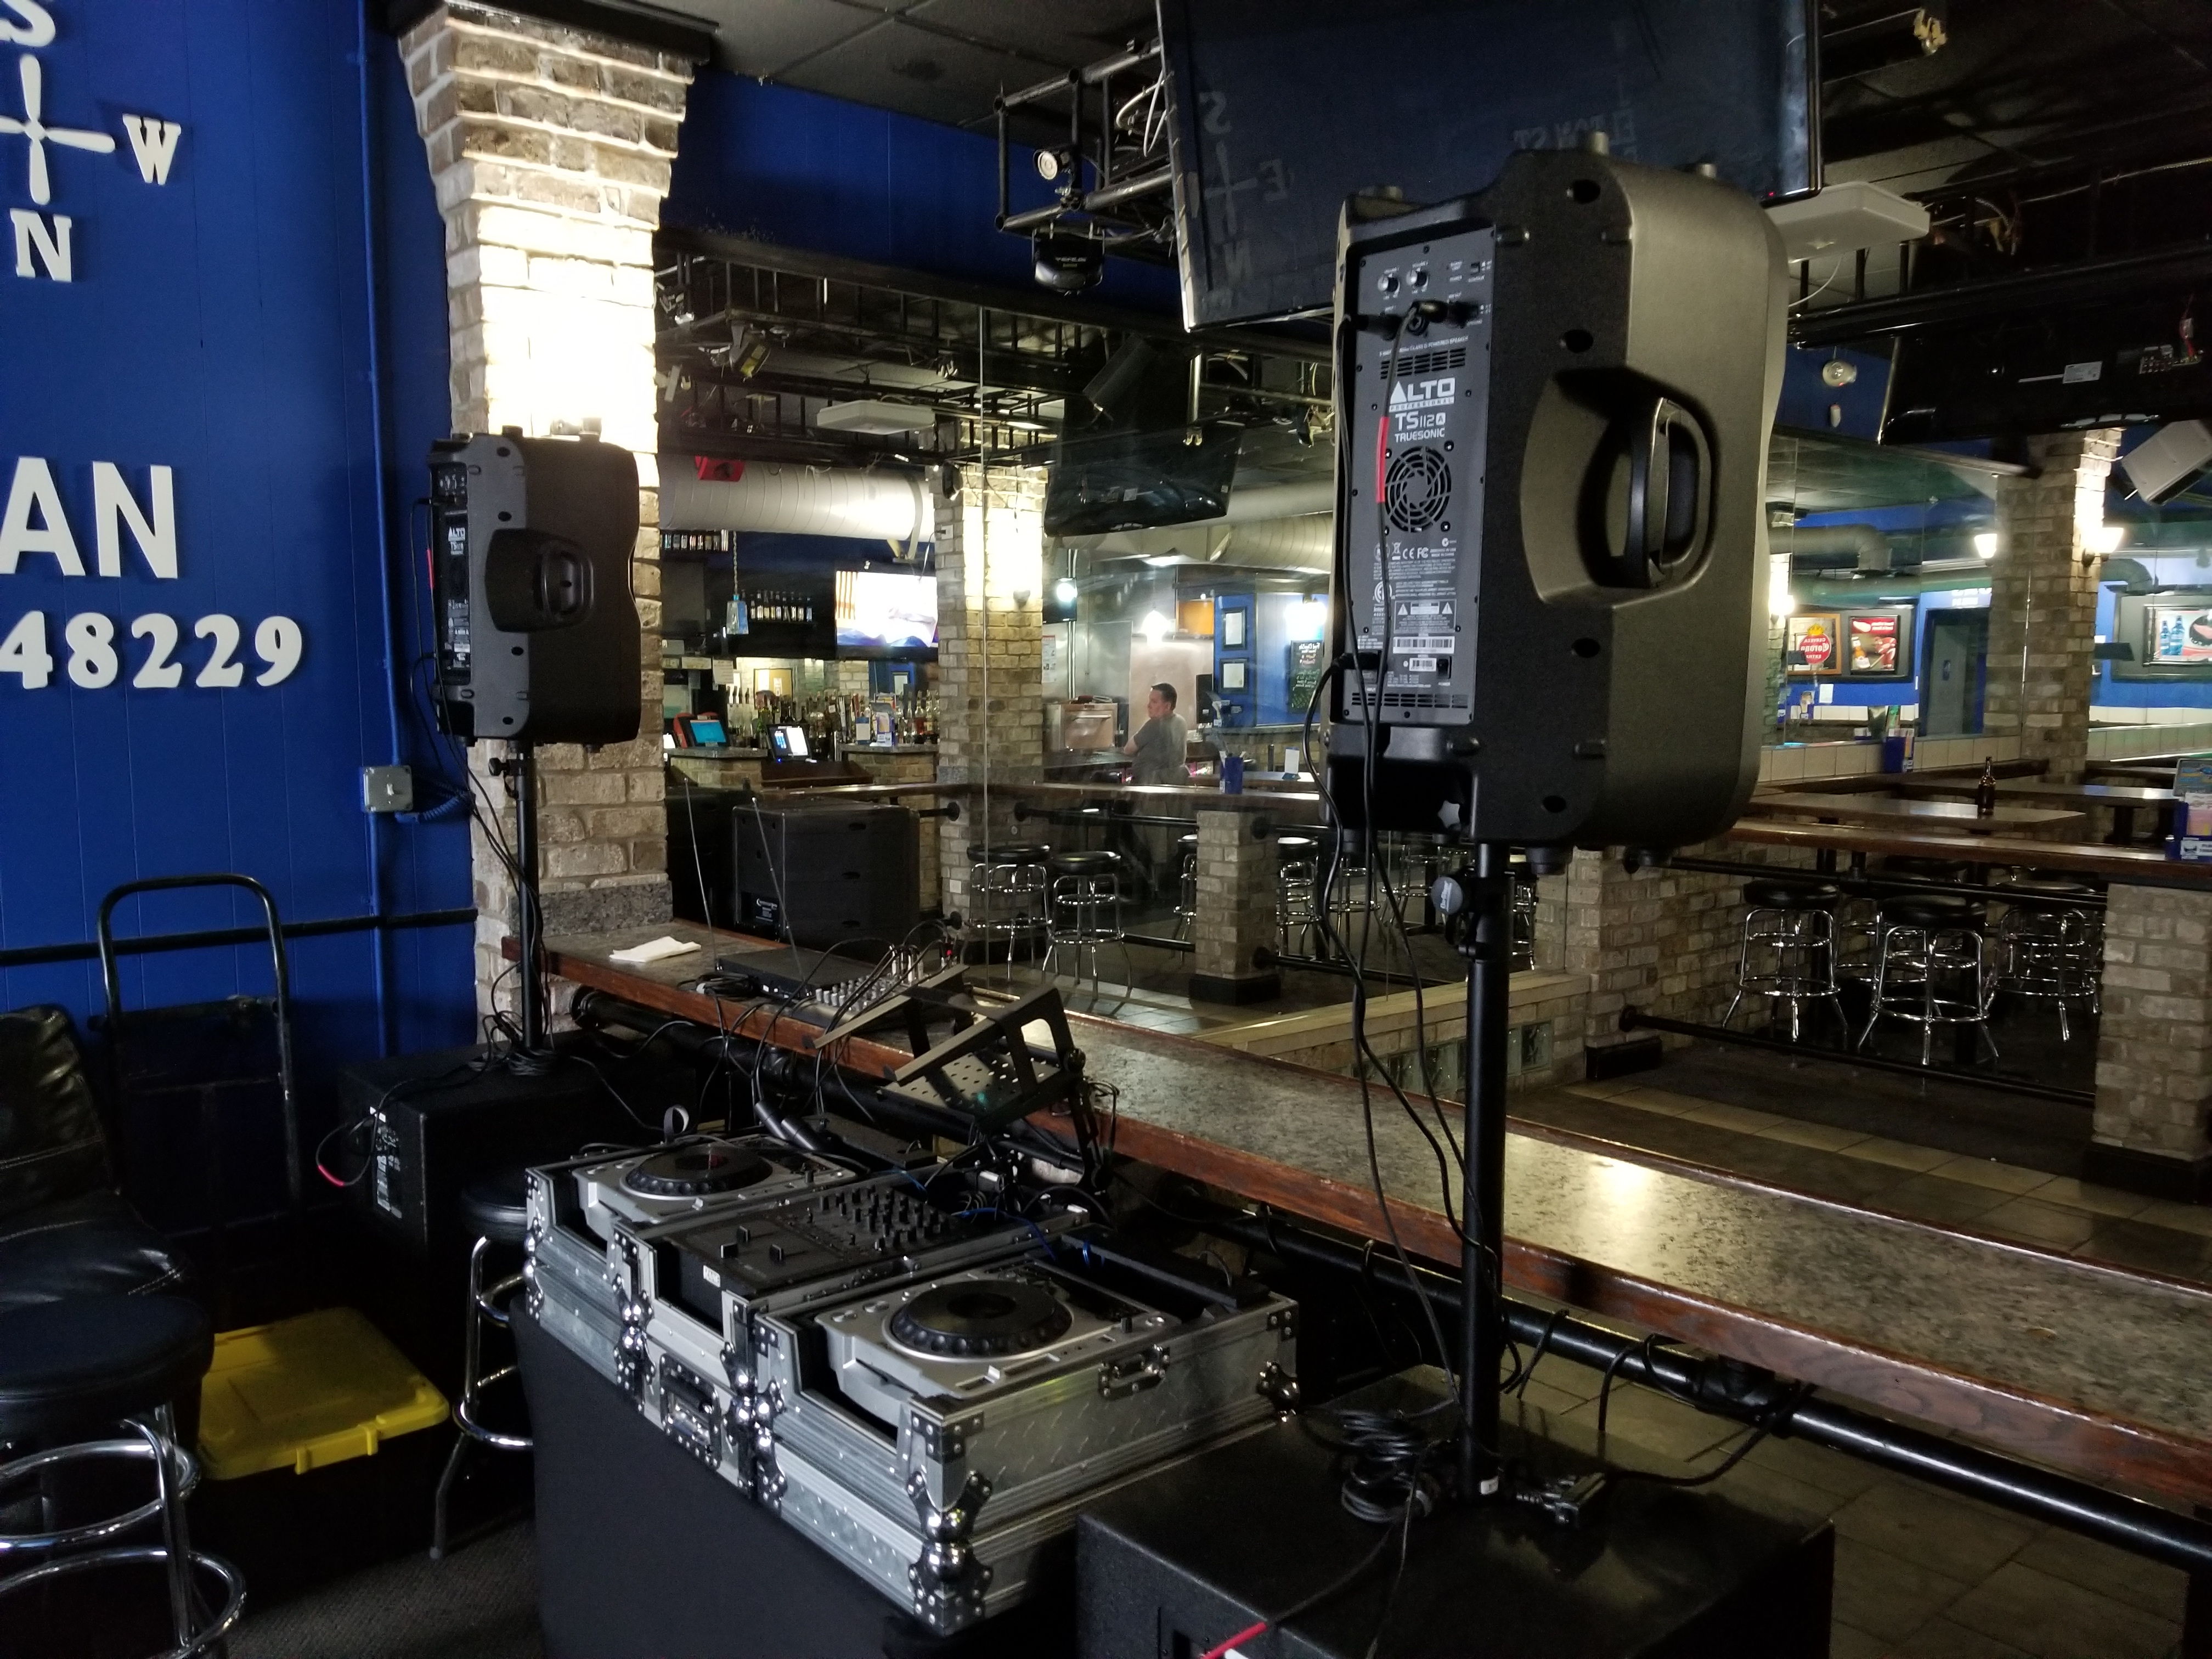 DJ station at Johniies Bar - Mexico Way Kitchen - Ecorse Michigan